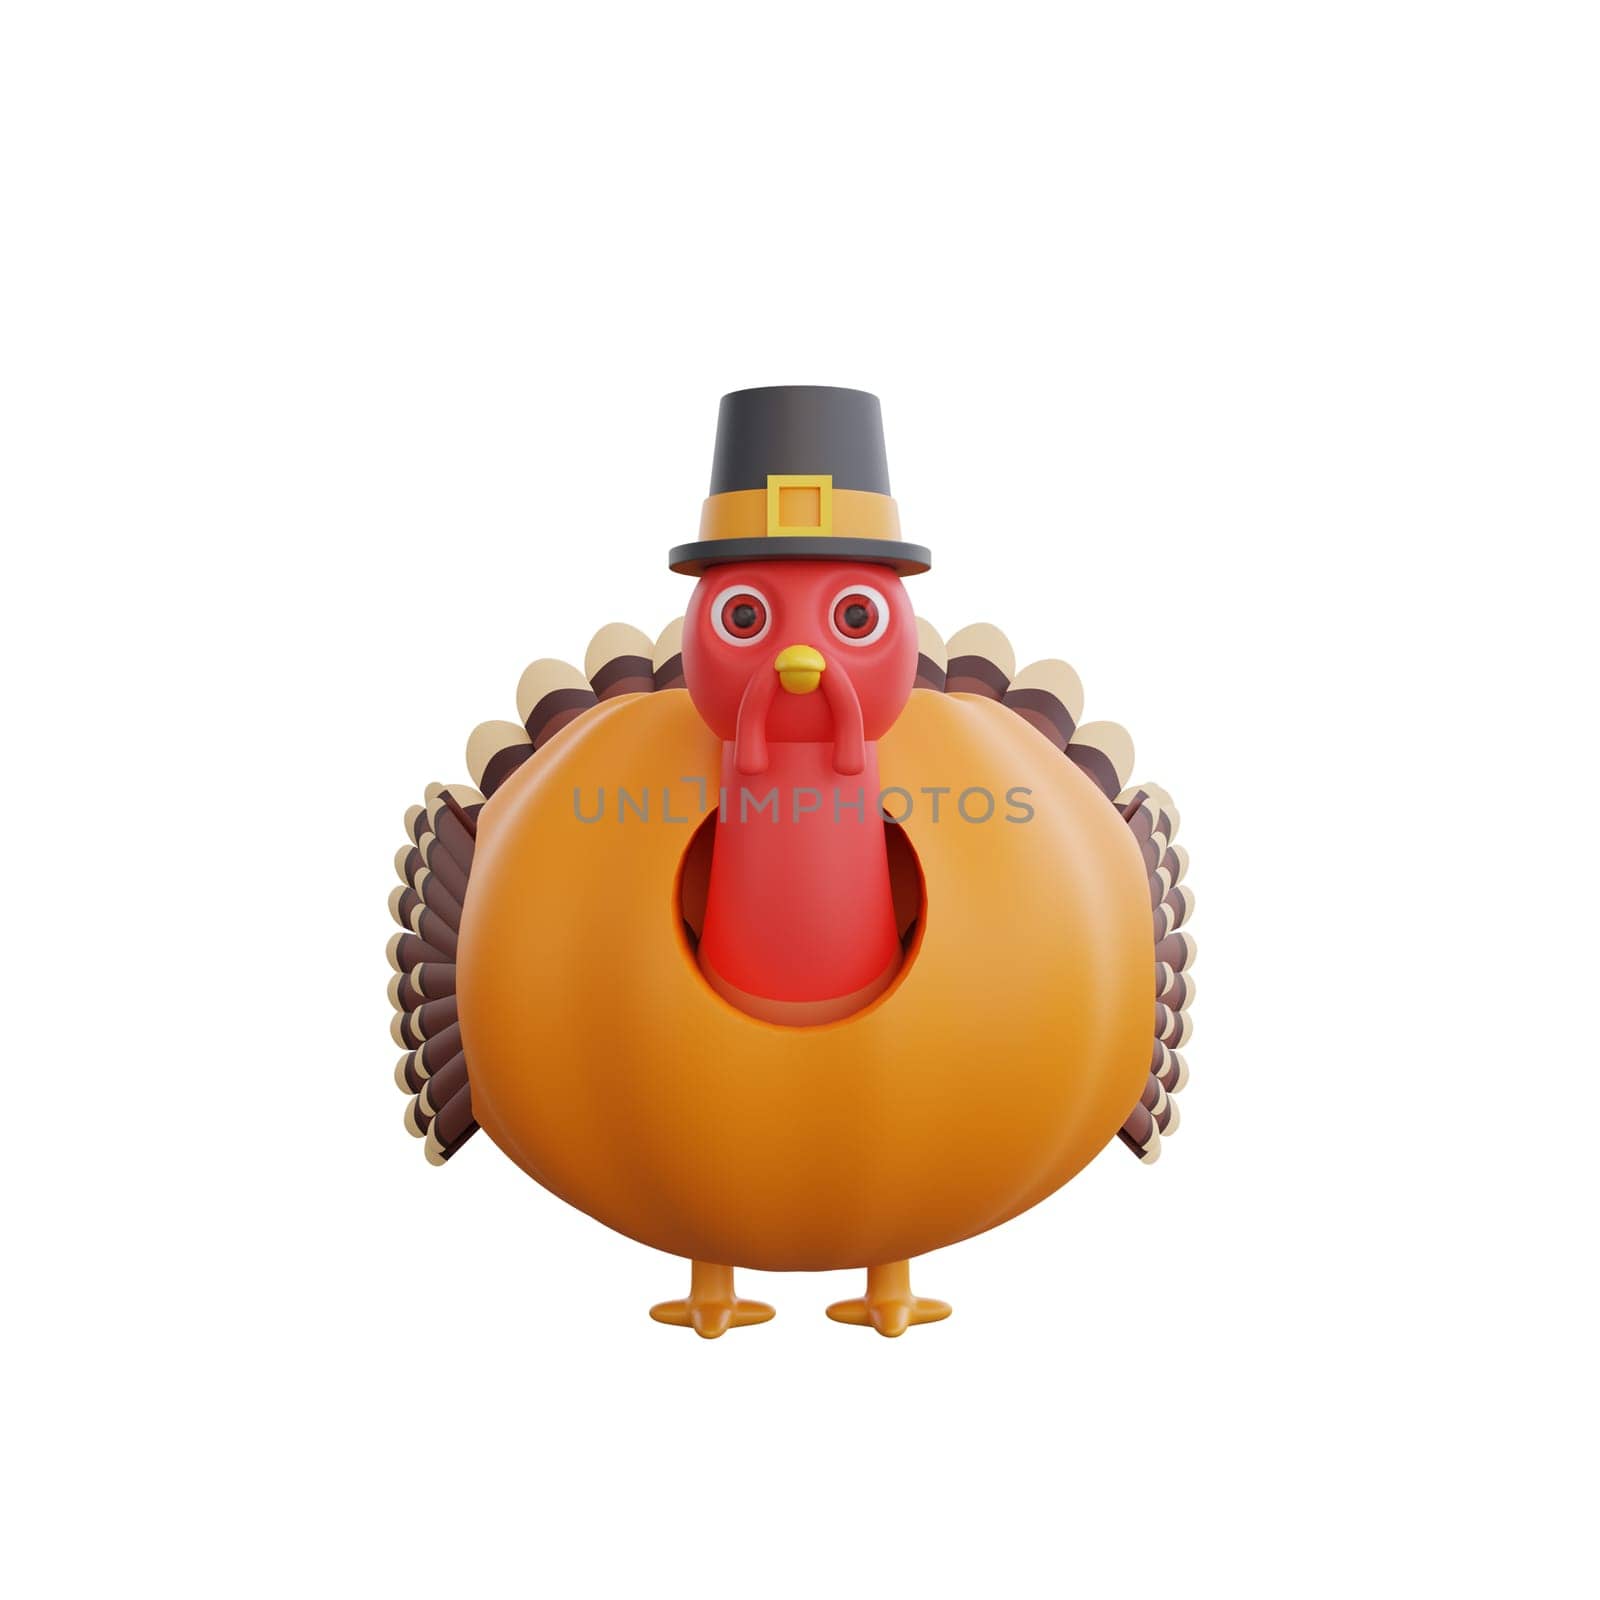 3D illustration of a Thanksgiving Turkey in a pumpkin costume by Rahmat_Djayusman